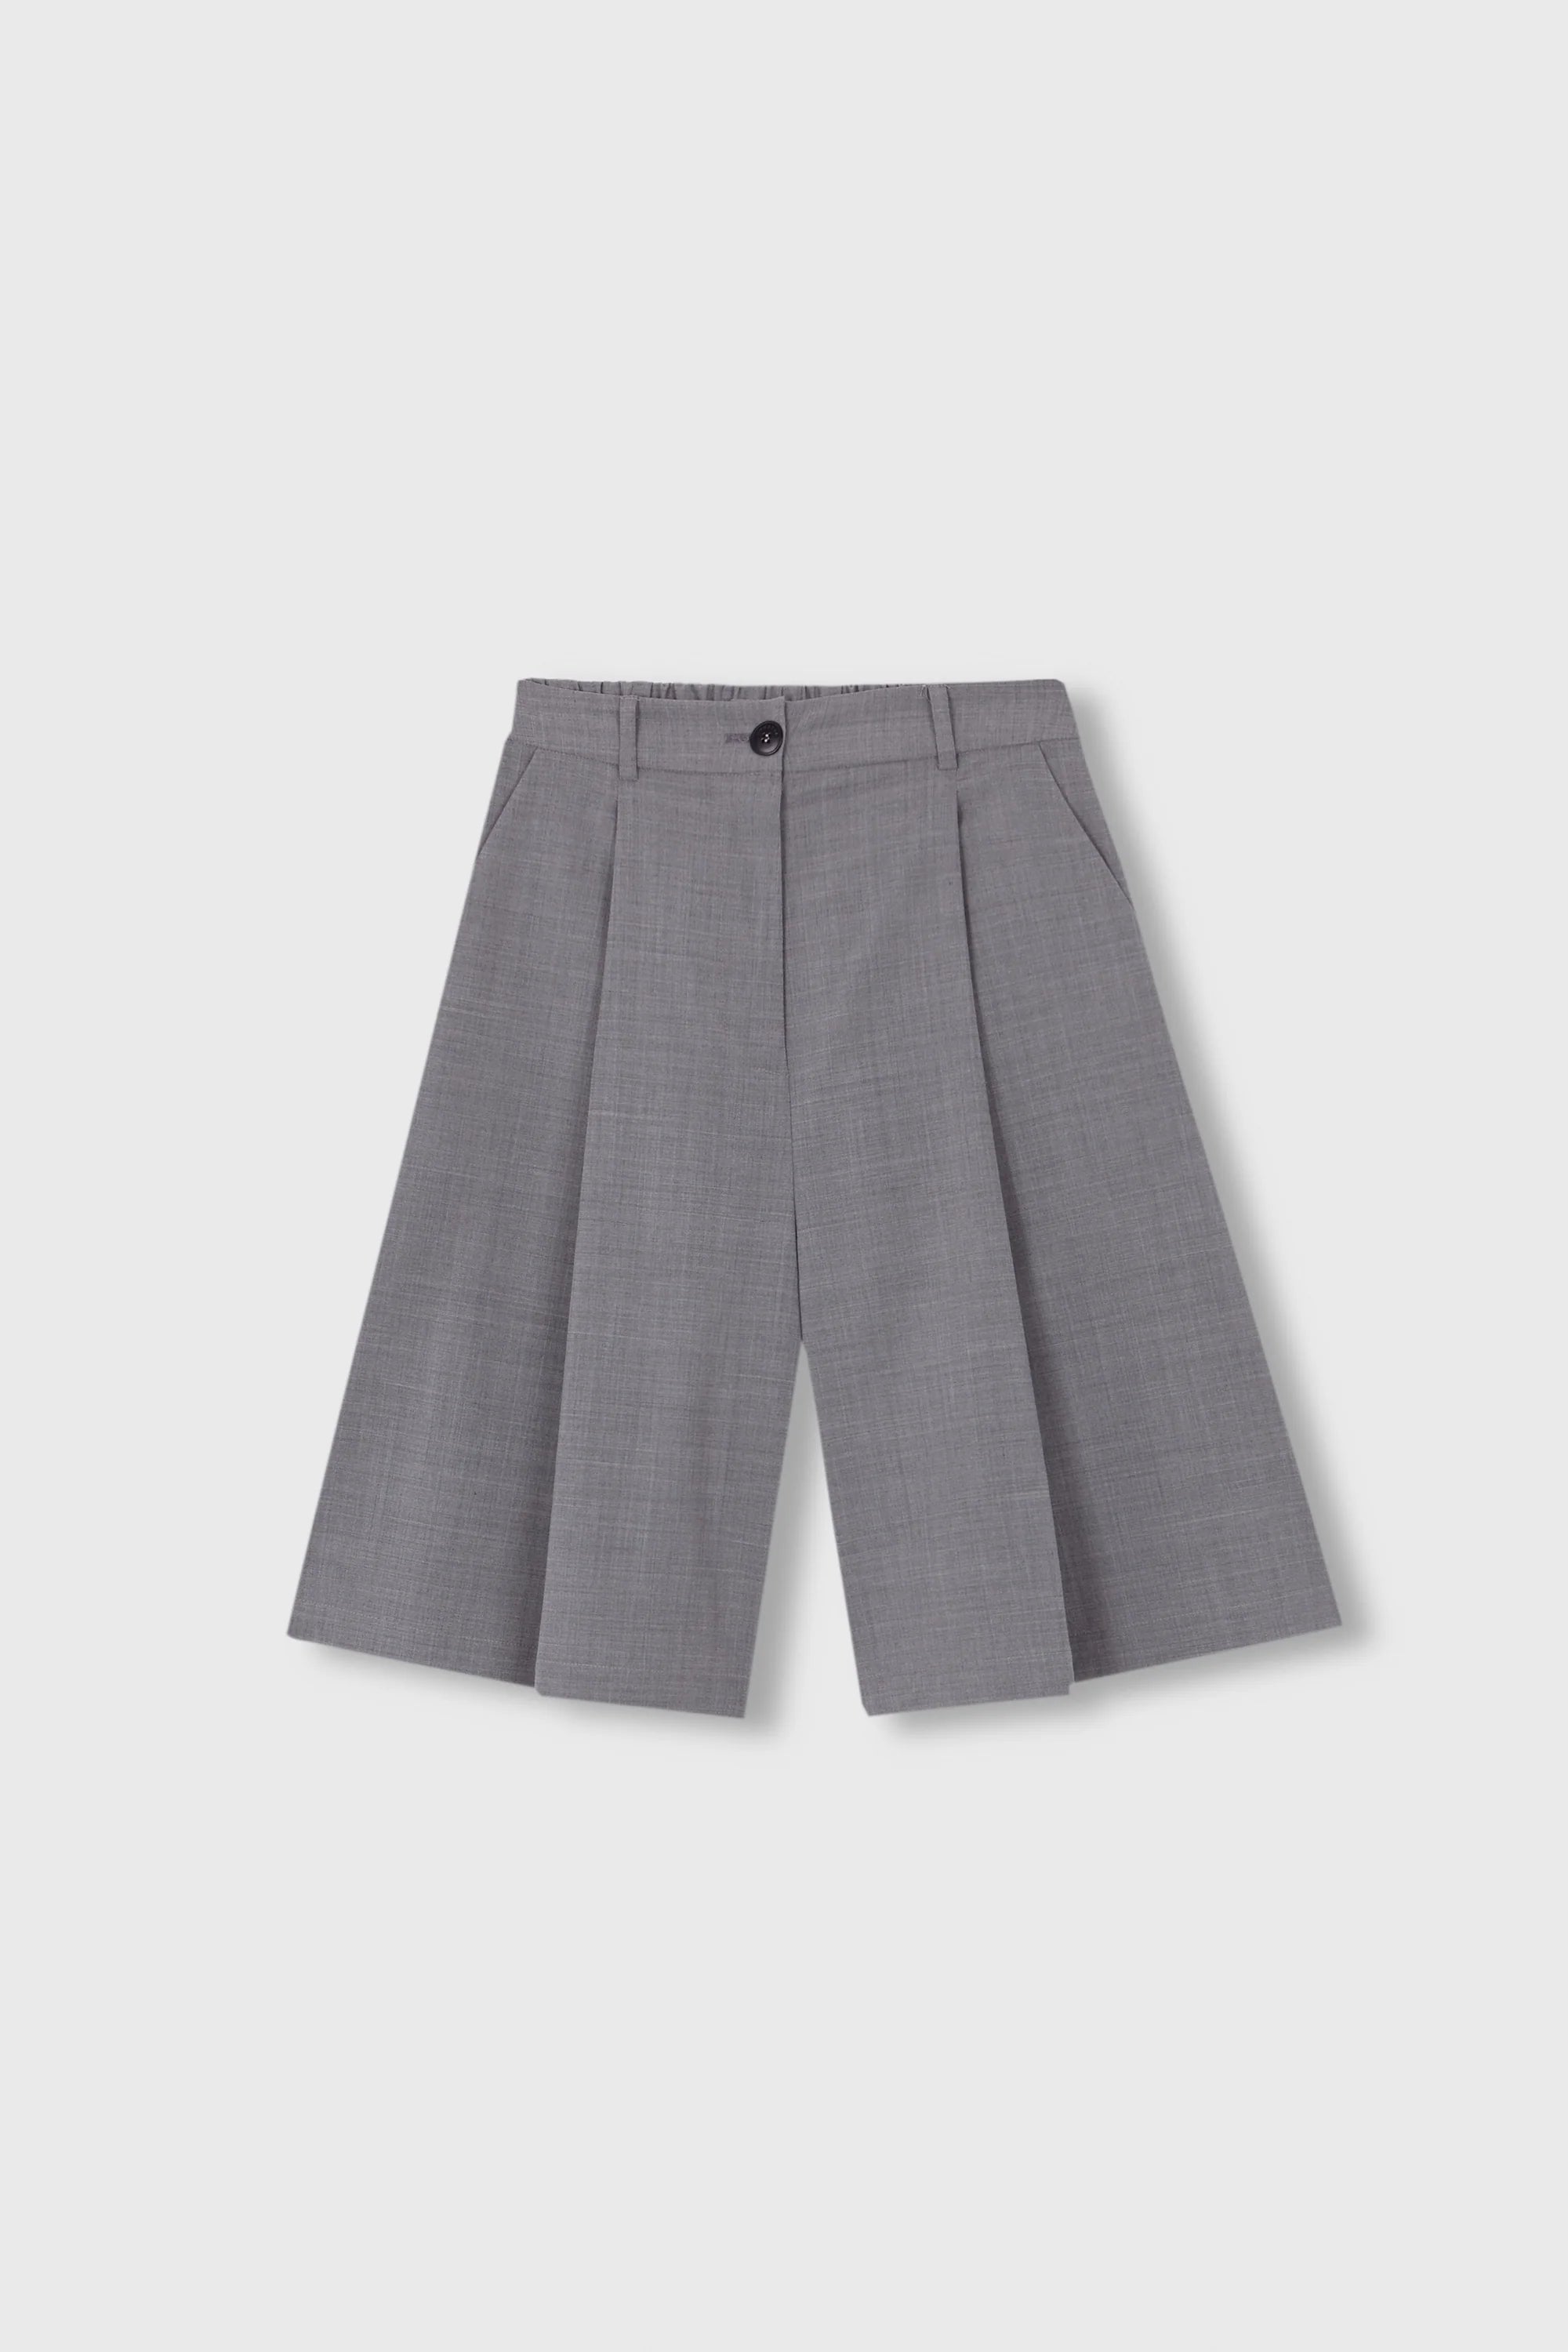 Cordera SS23 Tailoring Bermuda Shorts / Grey